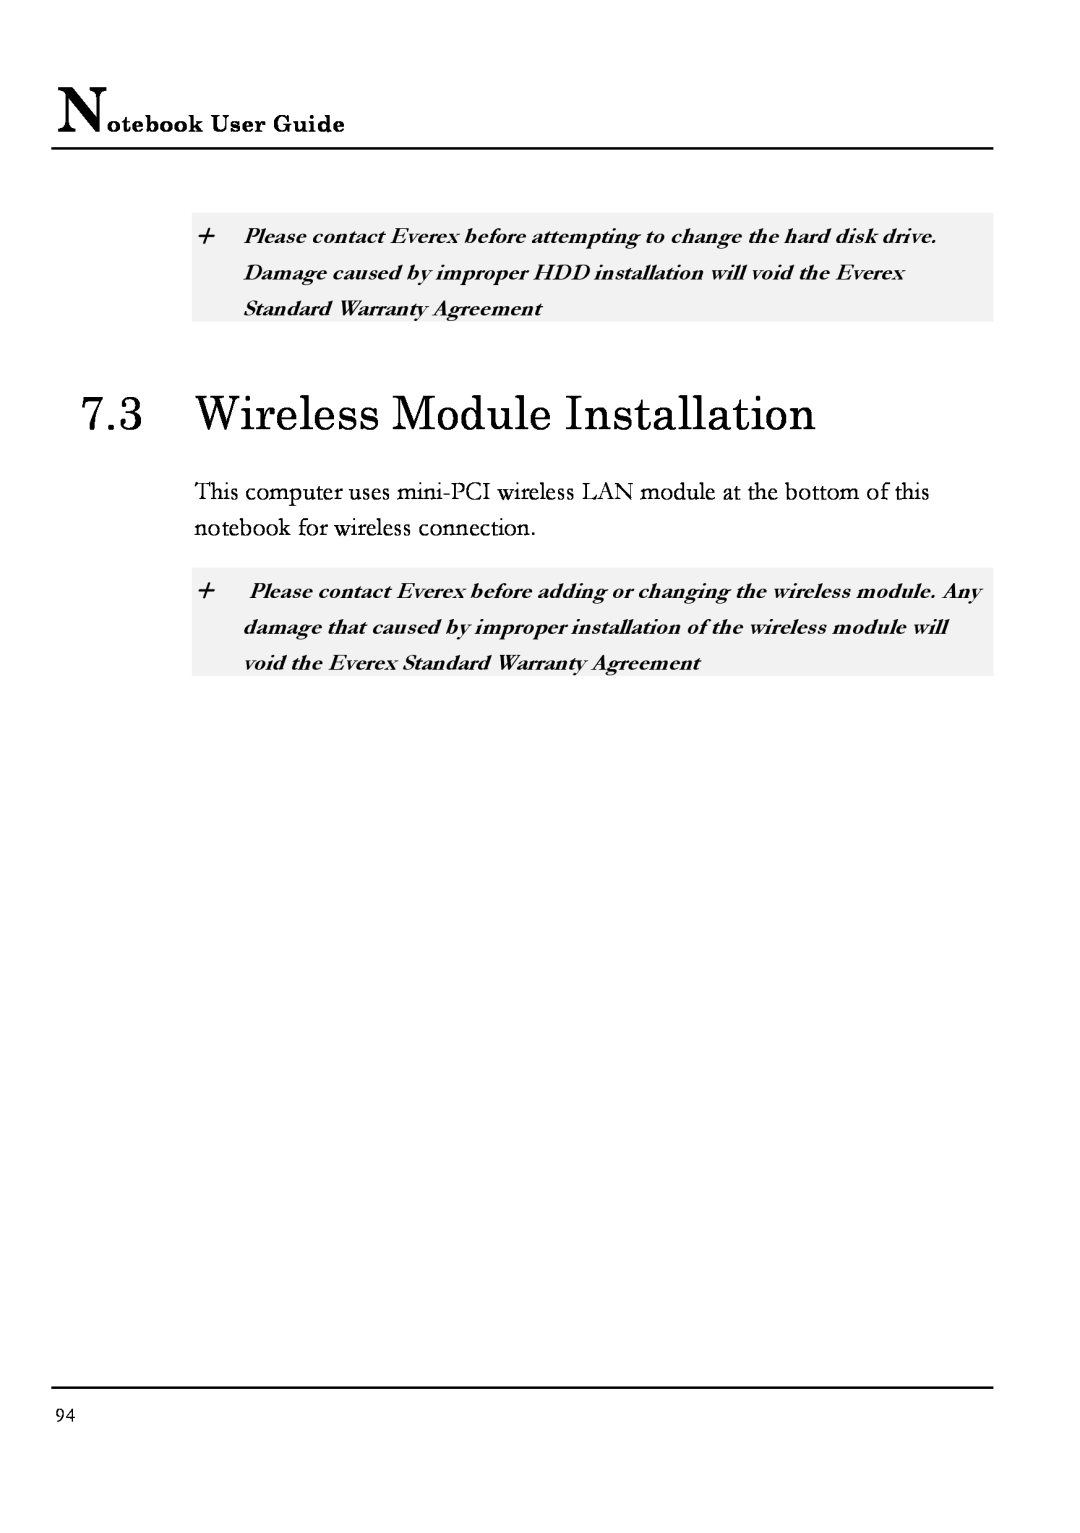 Everex NM3500W, NM4100W, NM3700W, NM3900W manual Wireless Module Installation, Notebook User Guide 